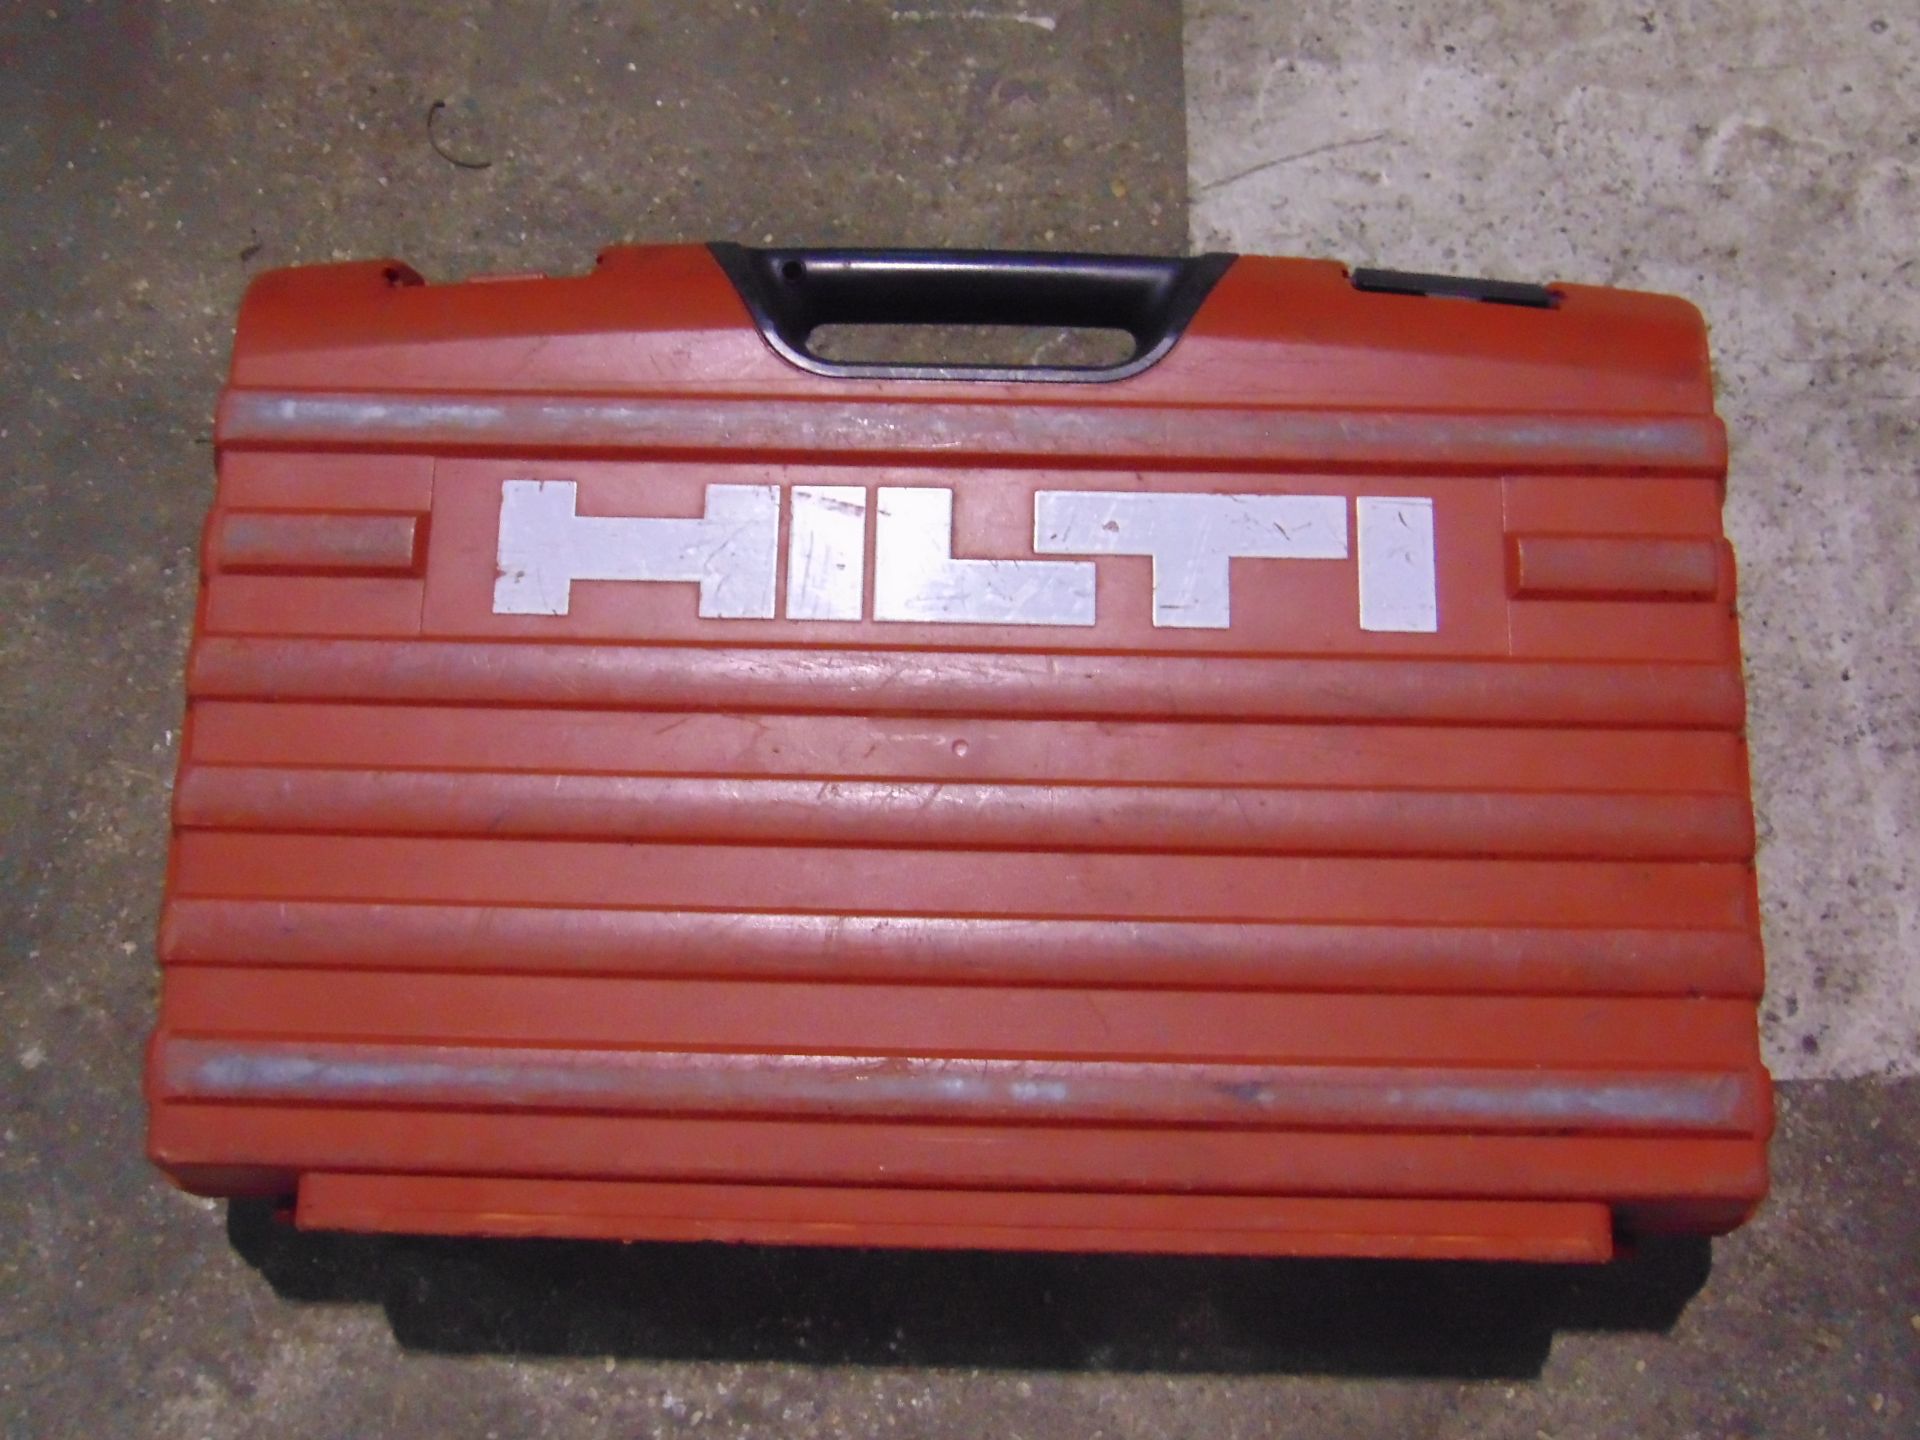 Hilti WSR36-A Cordless Reciprocating Saw - Image 4 of 4